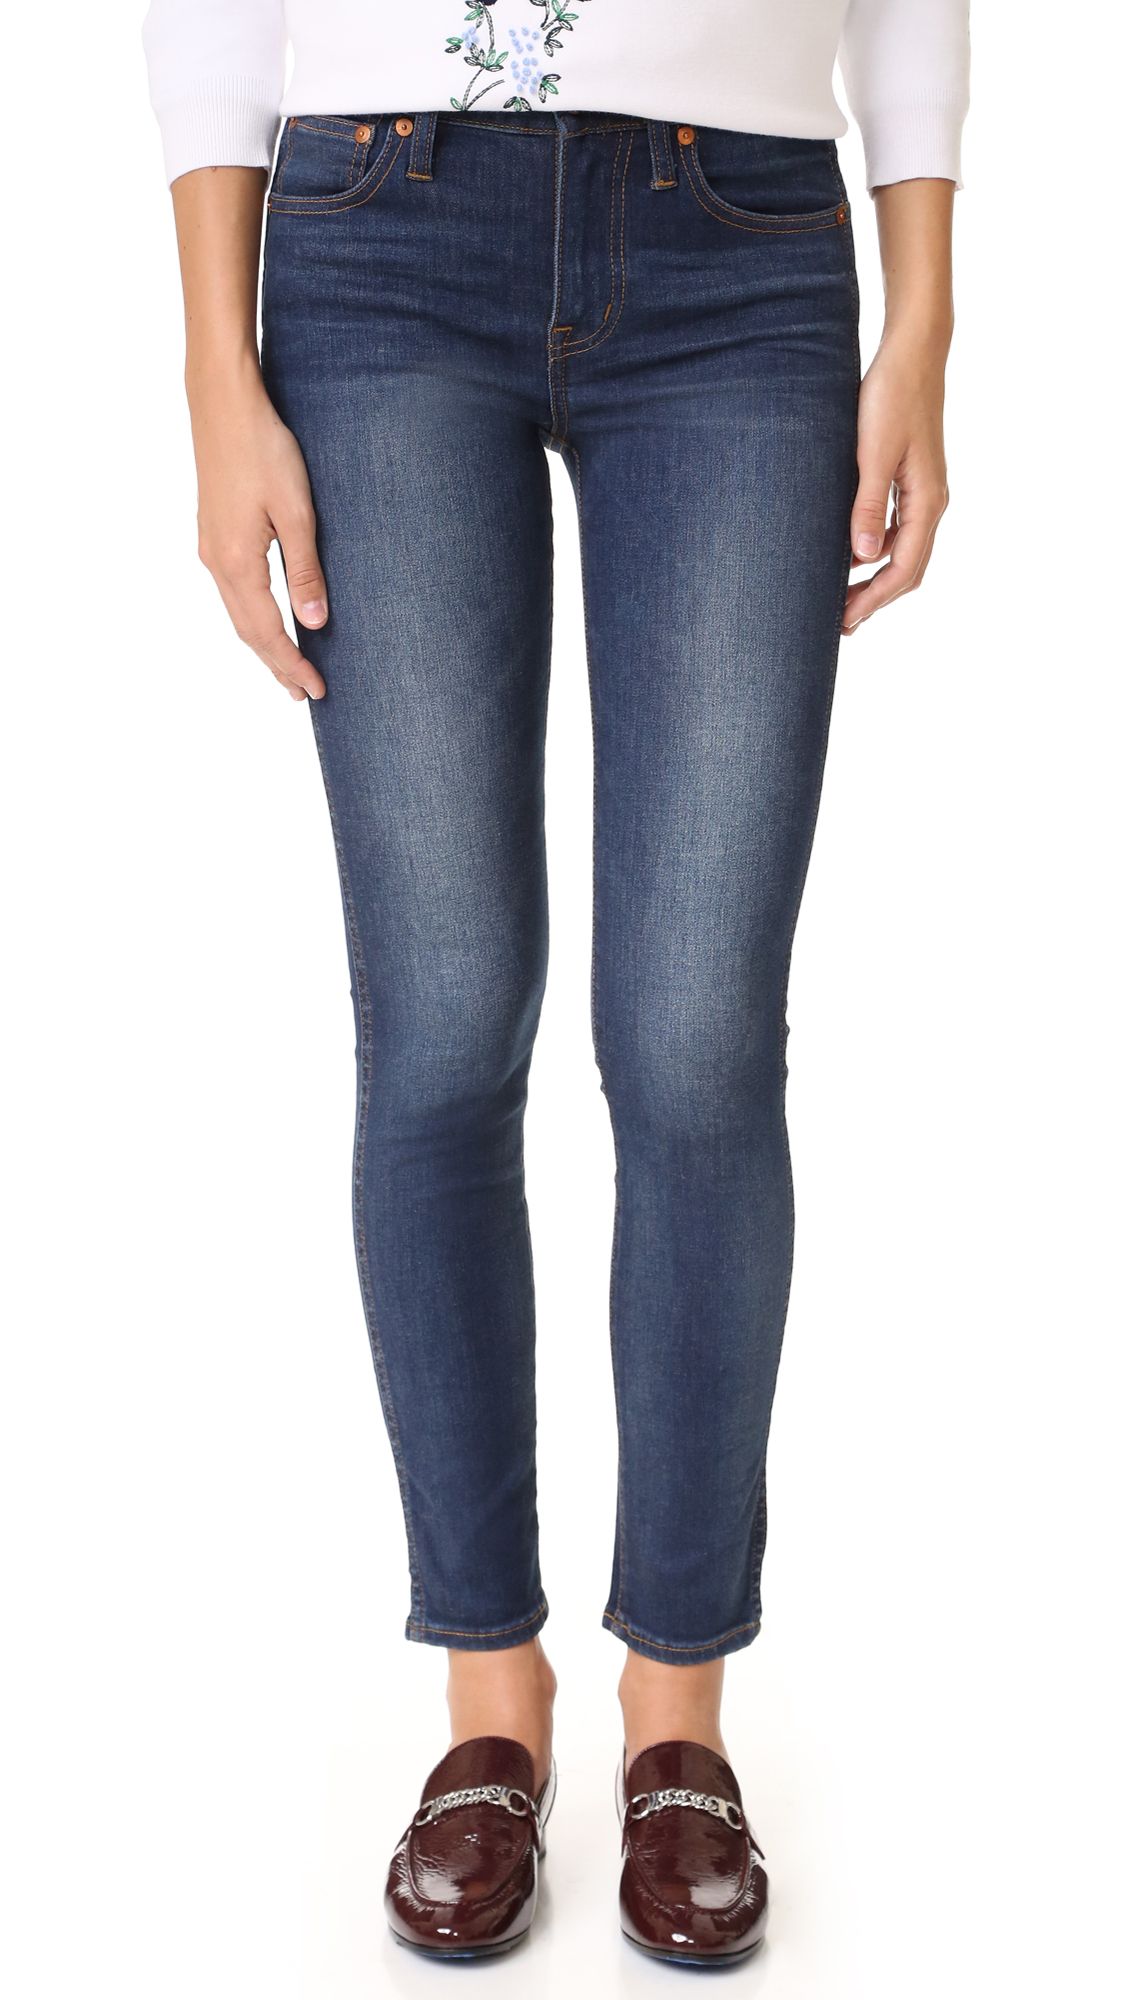 Madewell 9" High Riser Skinny Jeans - Surfside | Shopbop